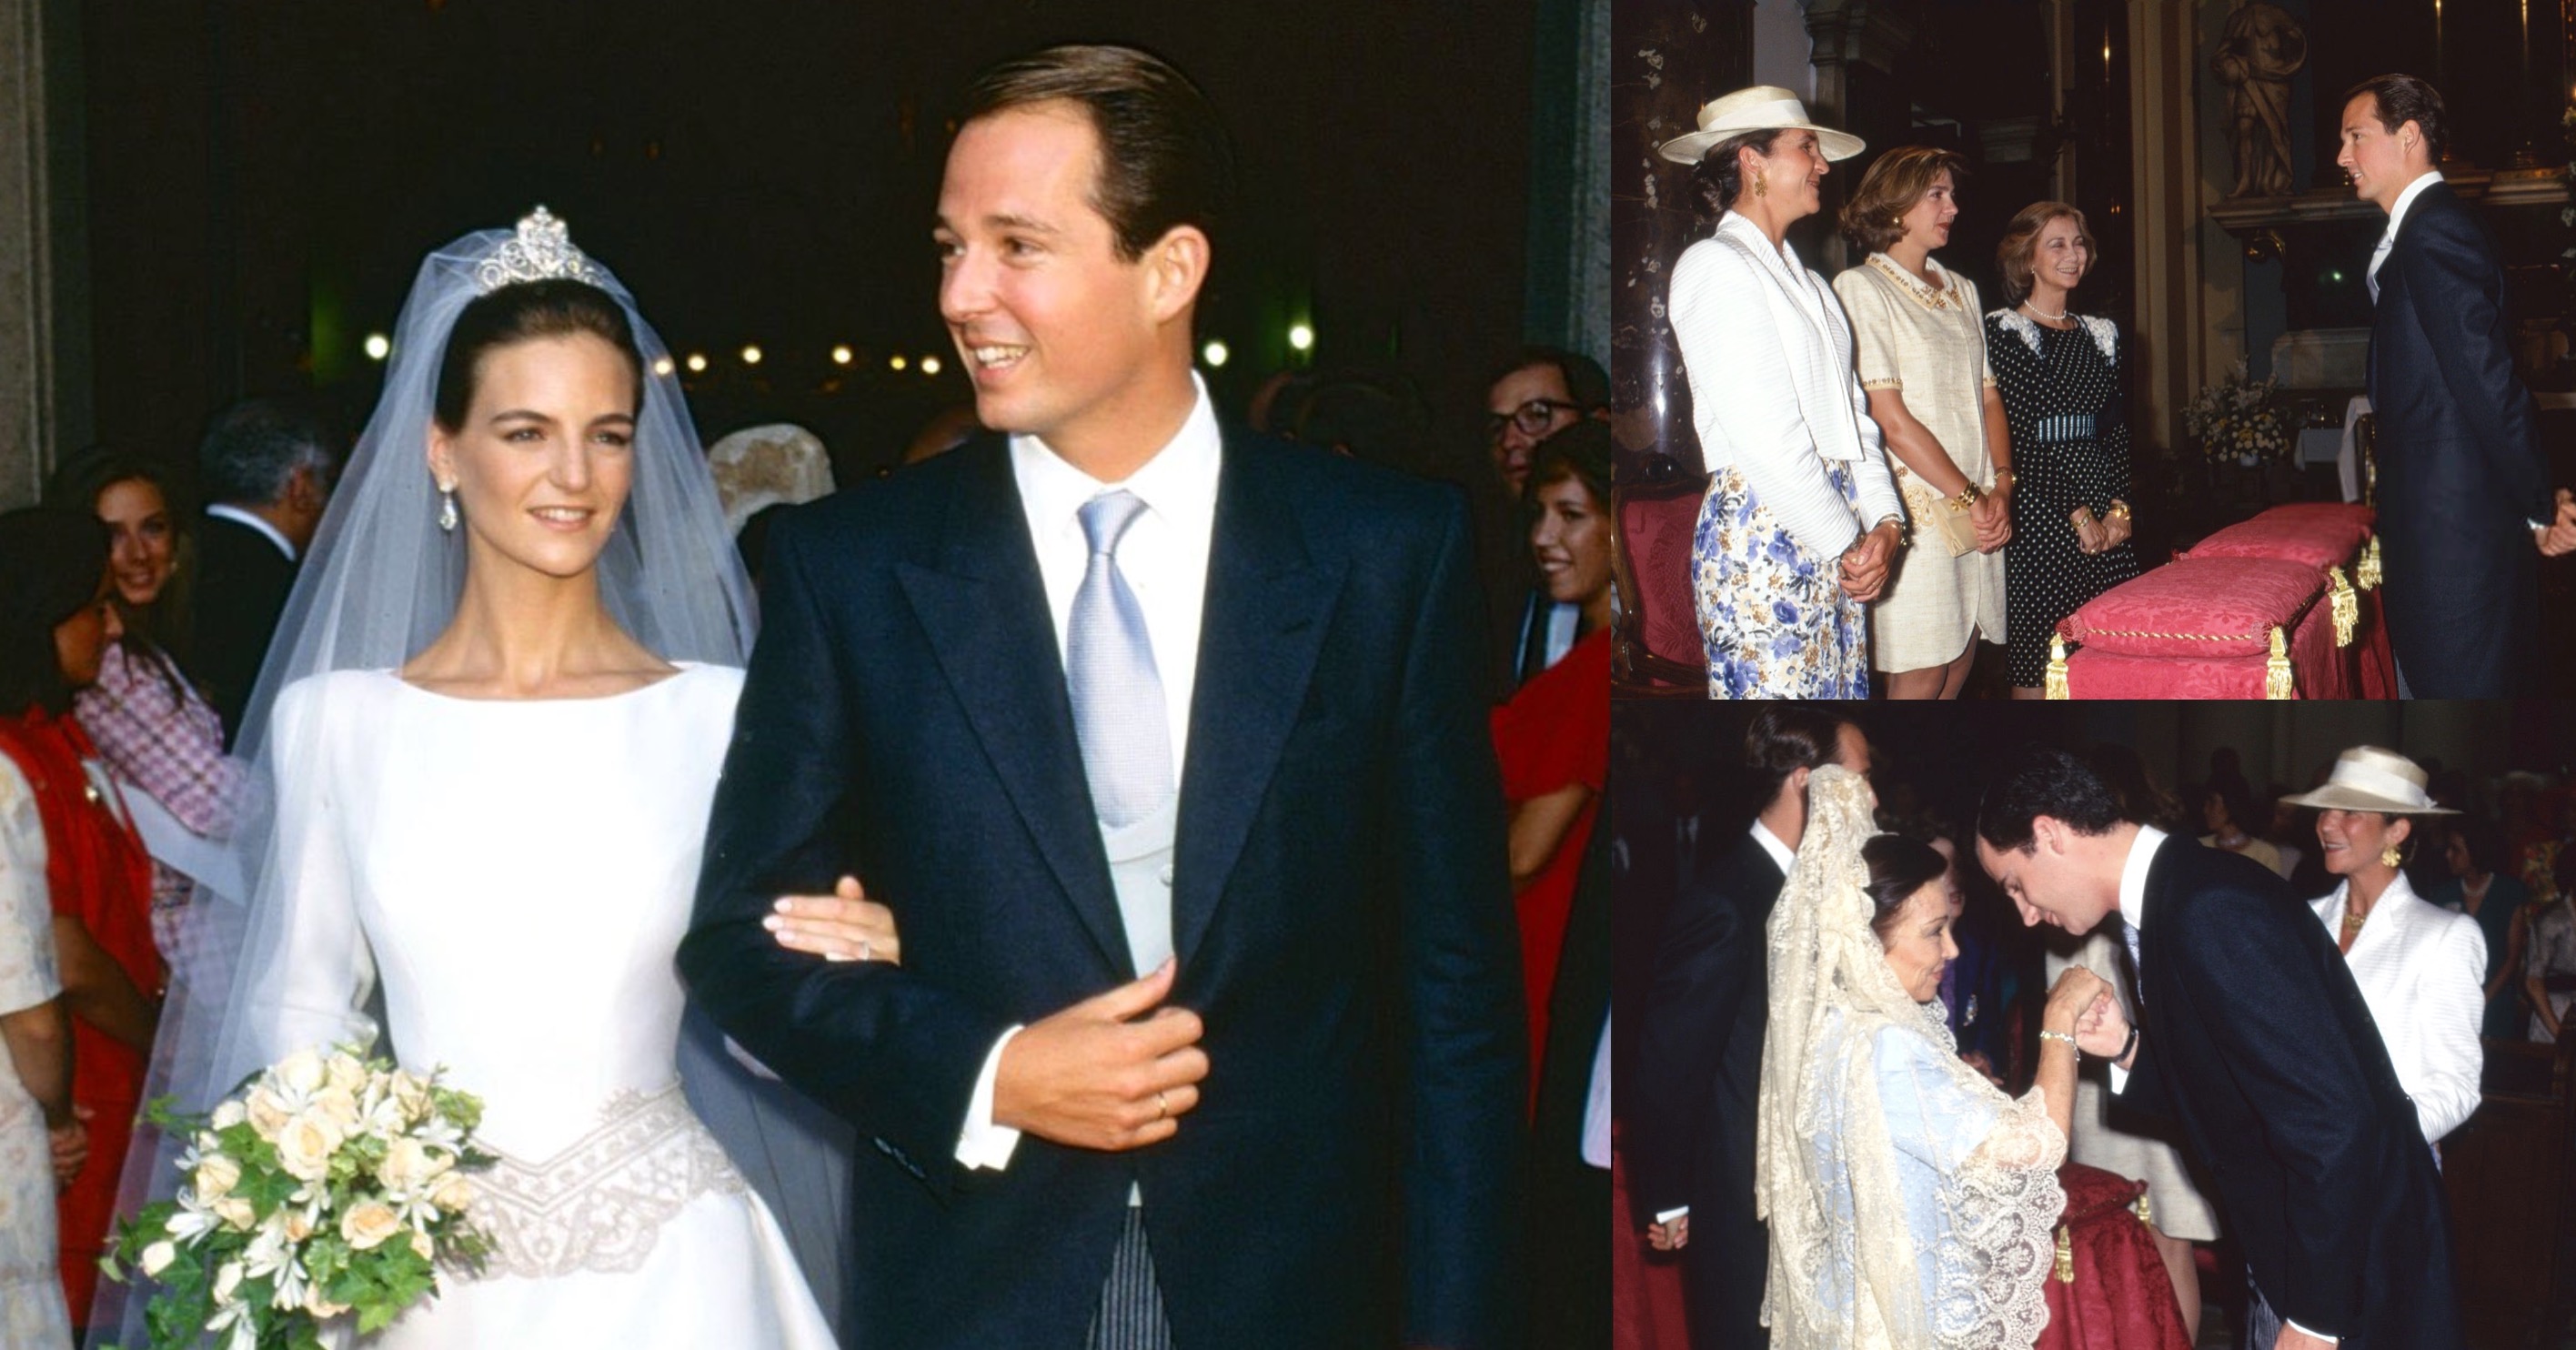 Wedding of Prince Konstantin of Bulgaria, 1994